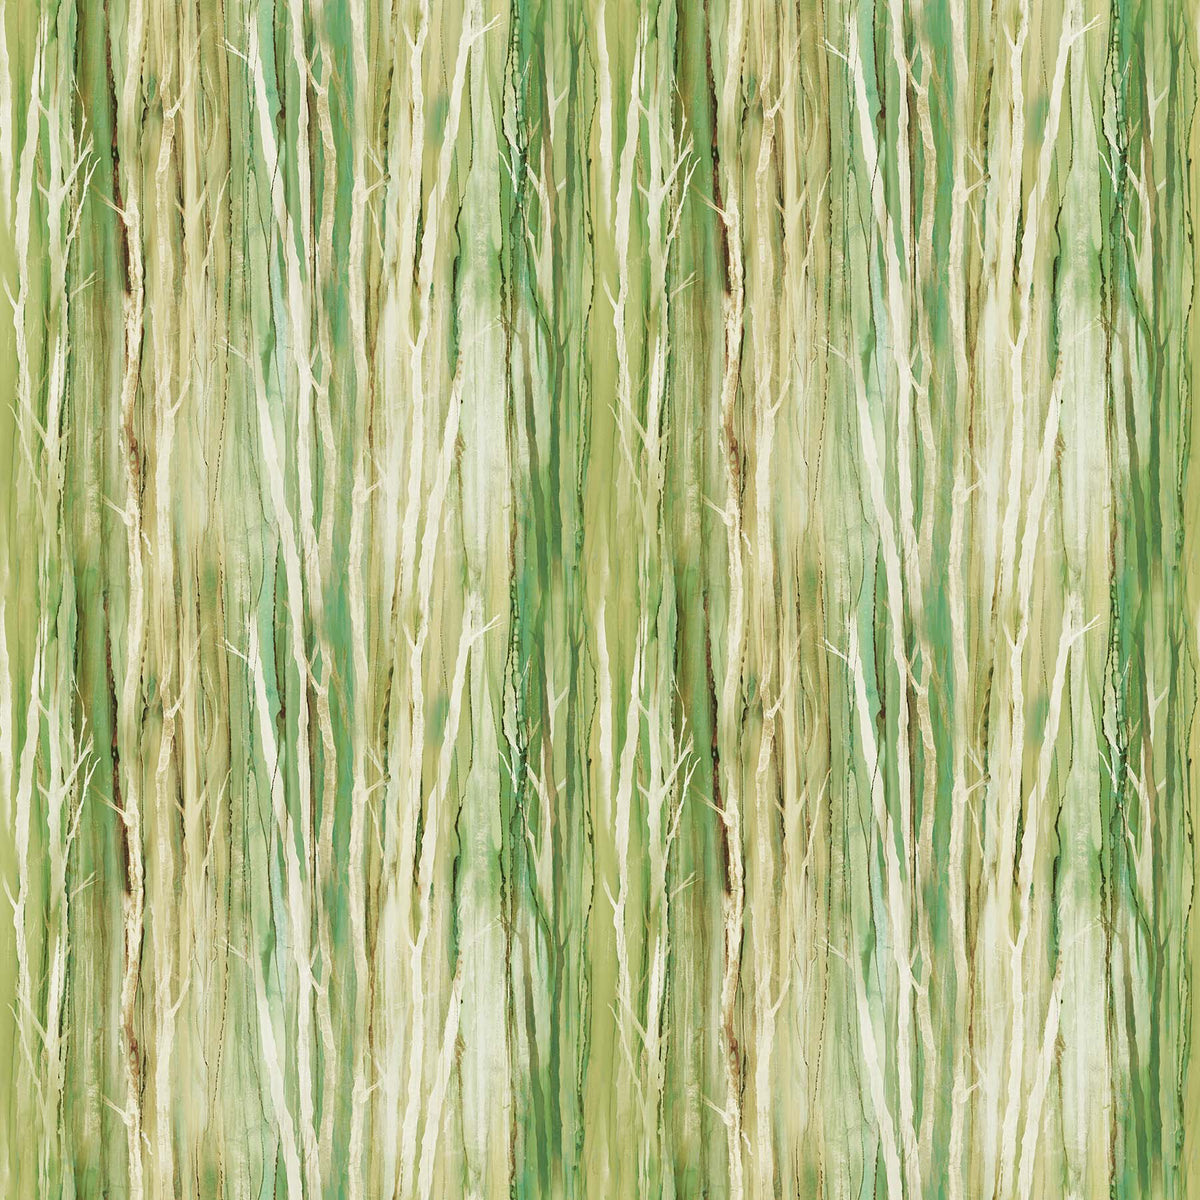 Cedarcrest Falls Quilt Fabric - Twig Texture in Olive Green - DP26910-74